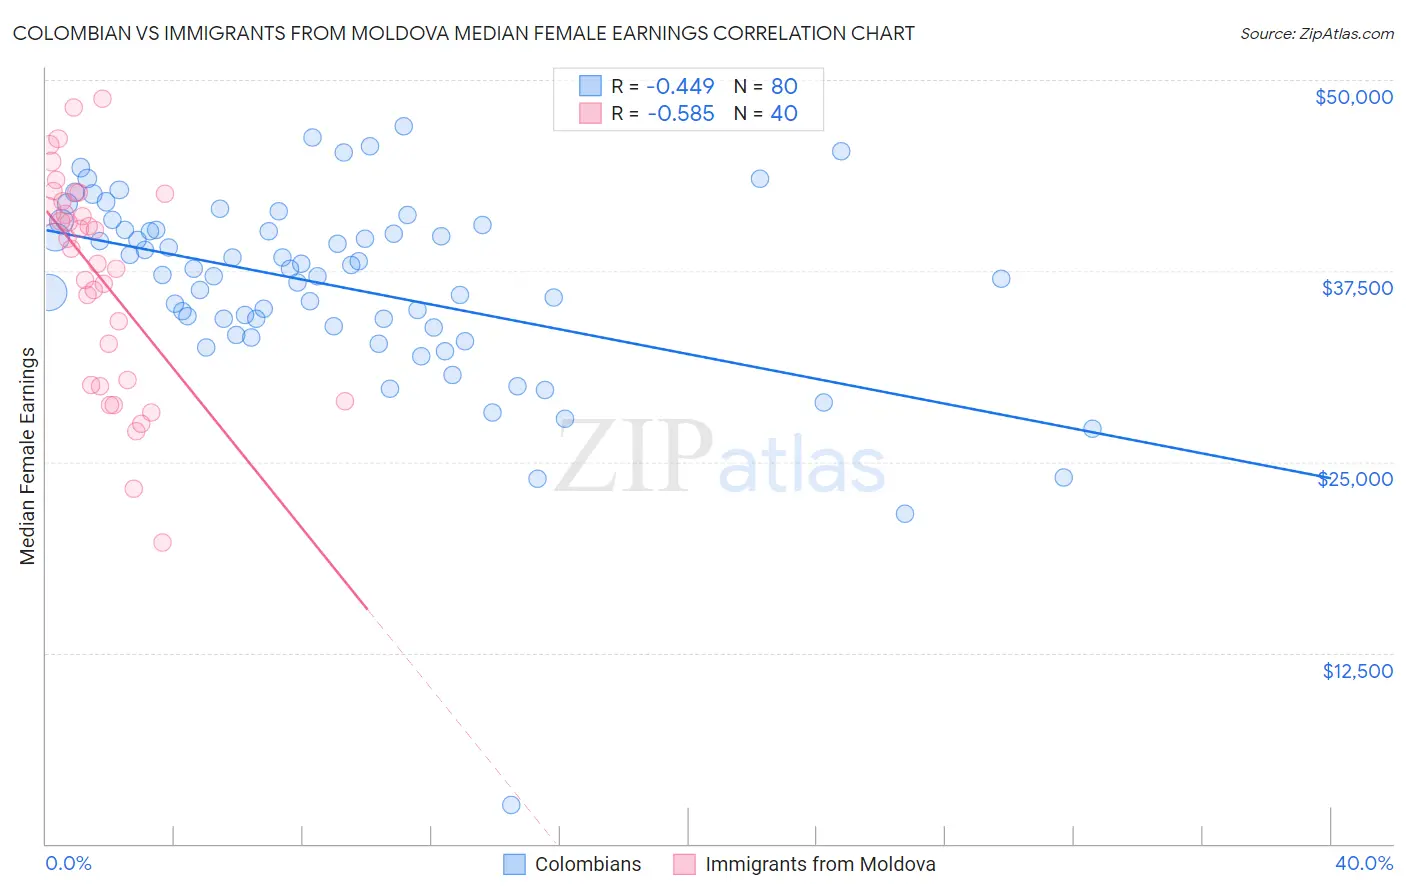 Colombian vs Immigrants from Moldova Median Female Earnings